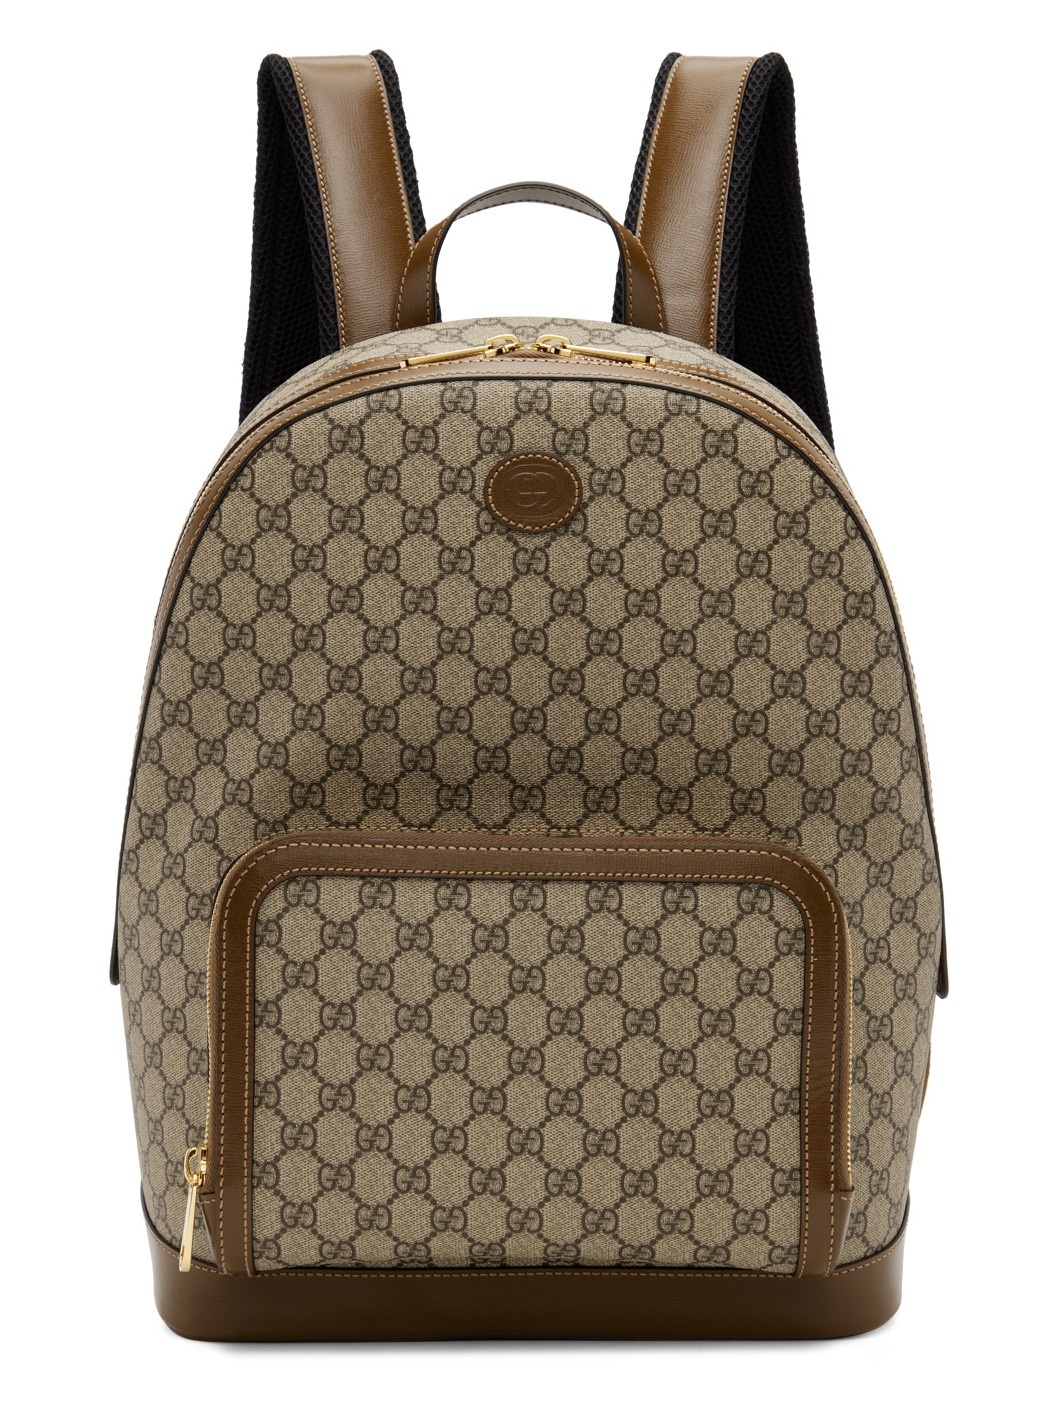 Beige & Brown GG Supreme Backpack - 1